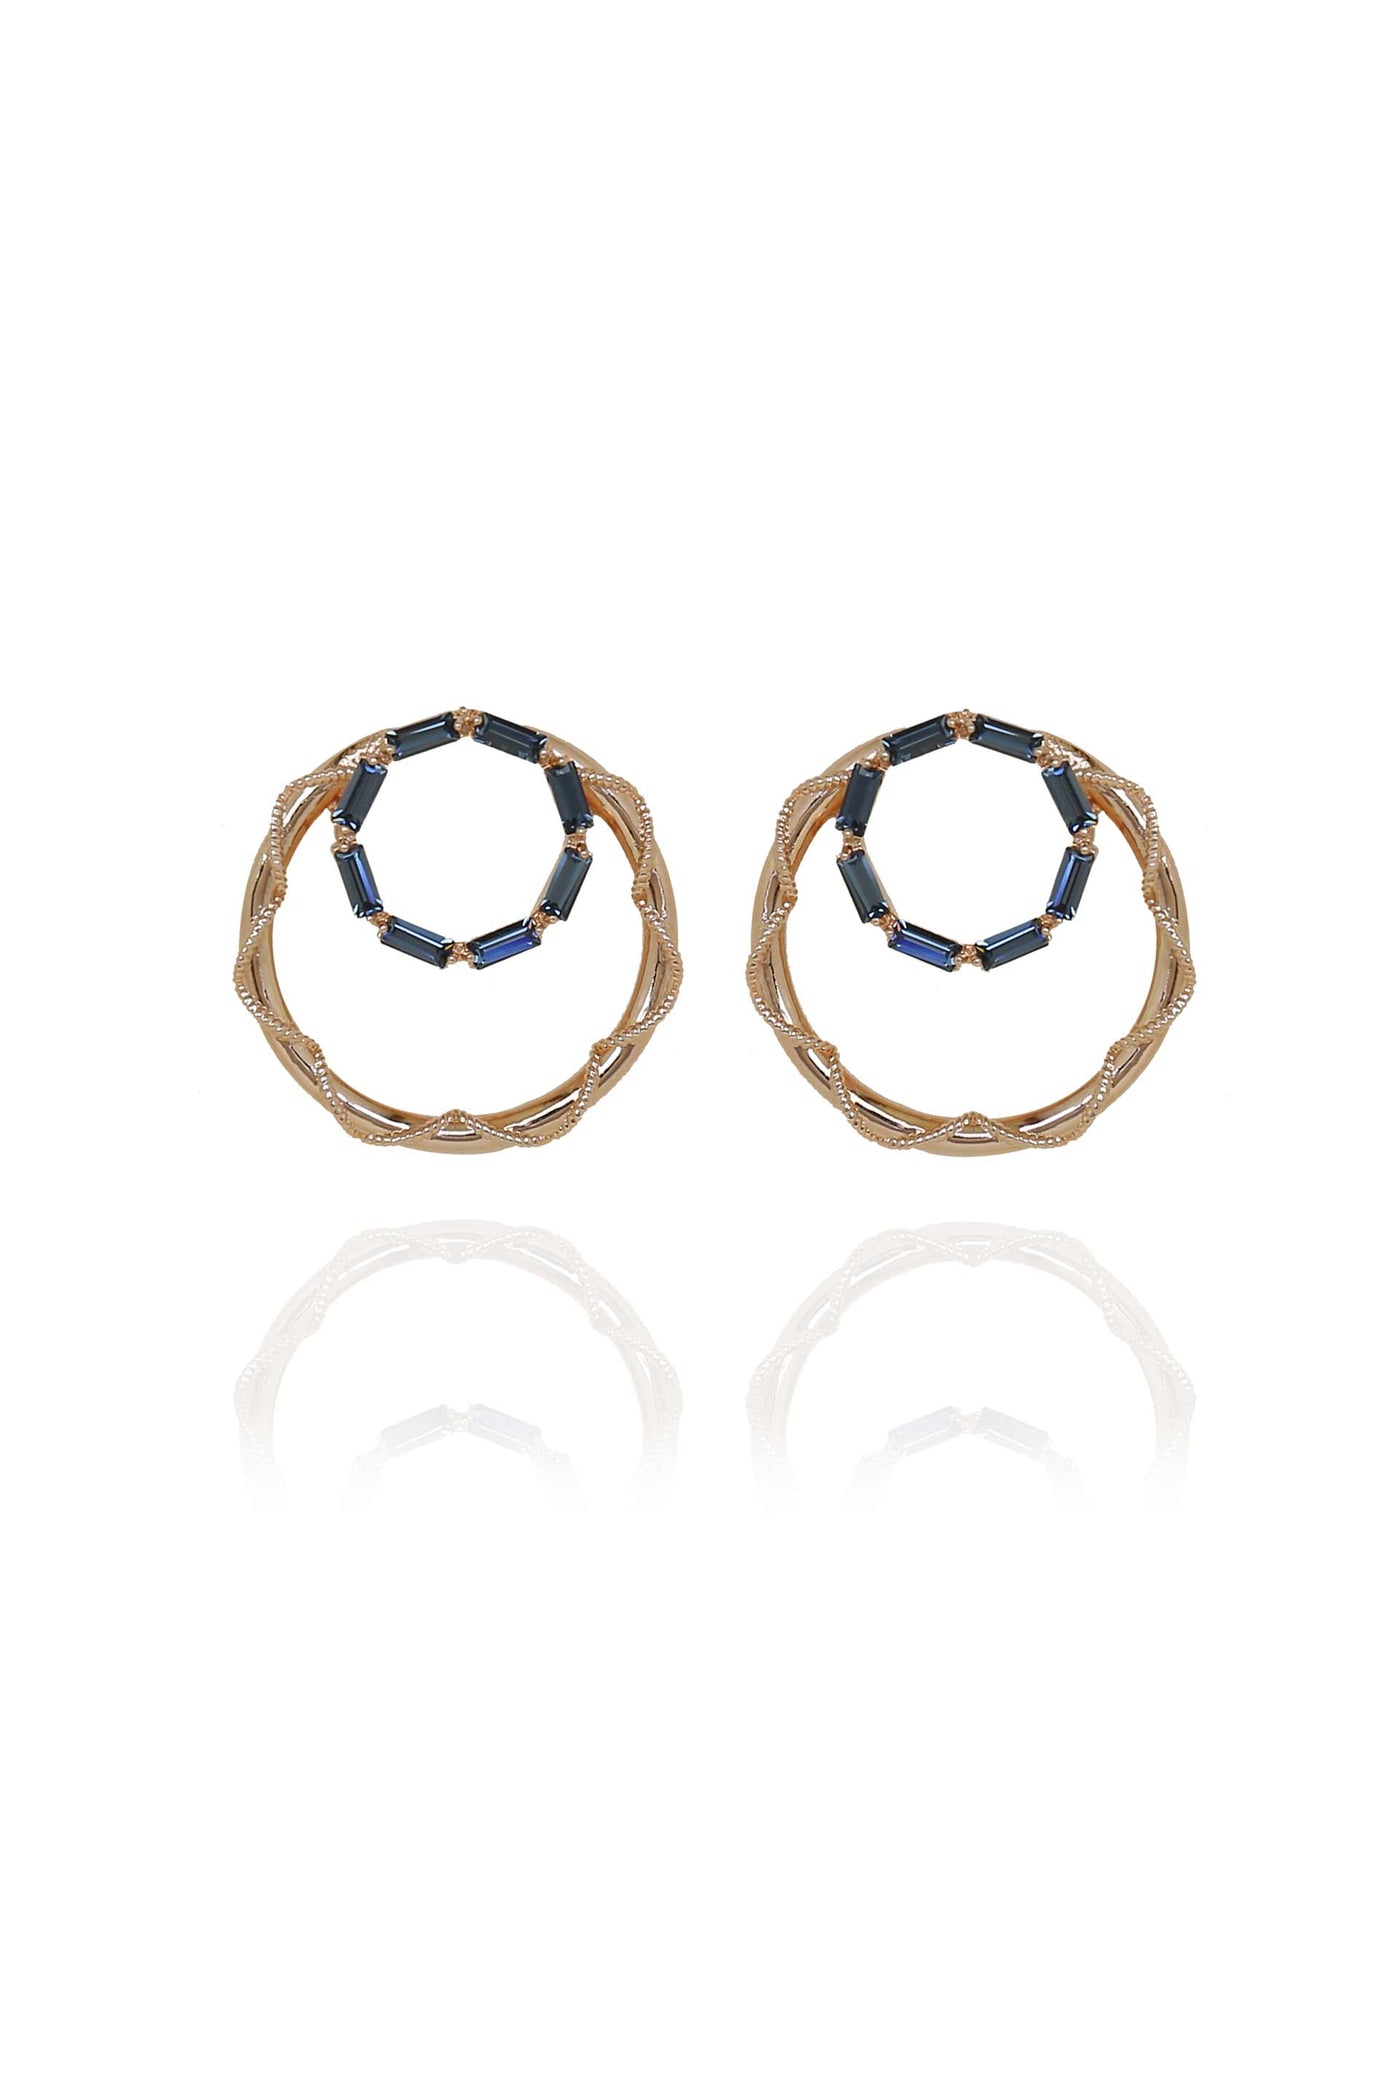 esme muriel earrings blue in rose gold fashion jewellery indian designer wear online shopping melange singapore